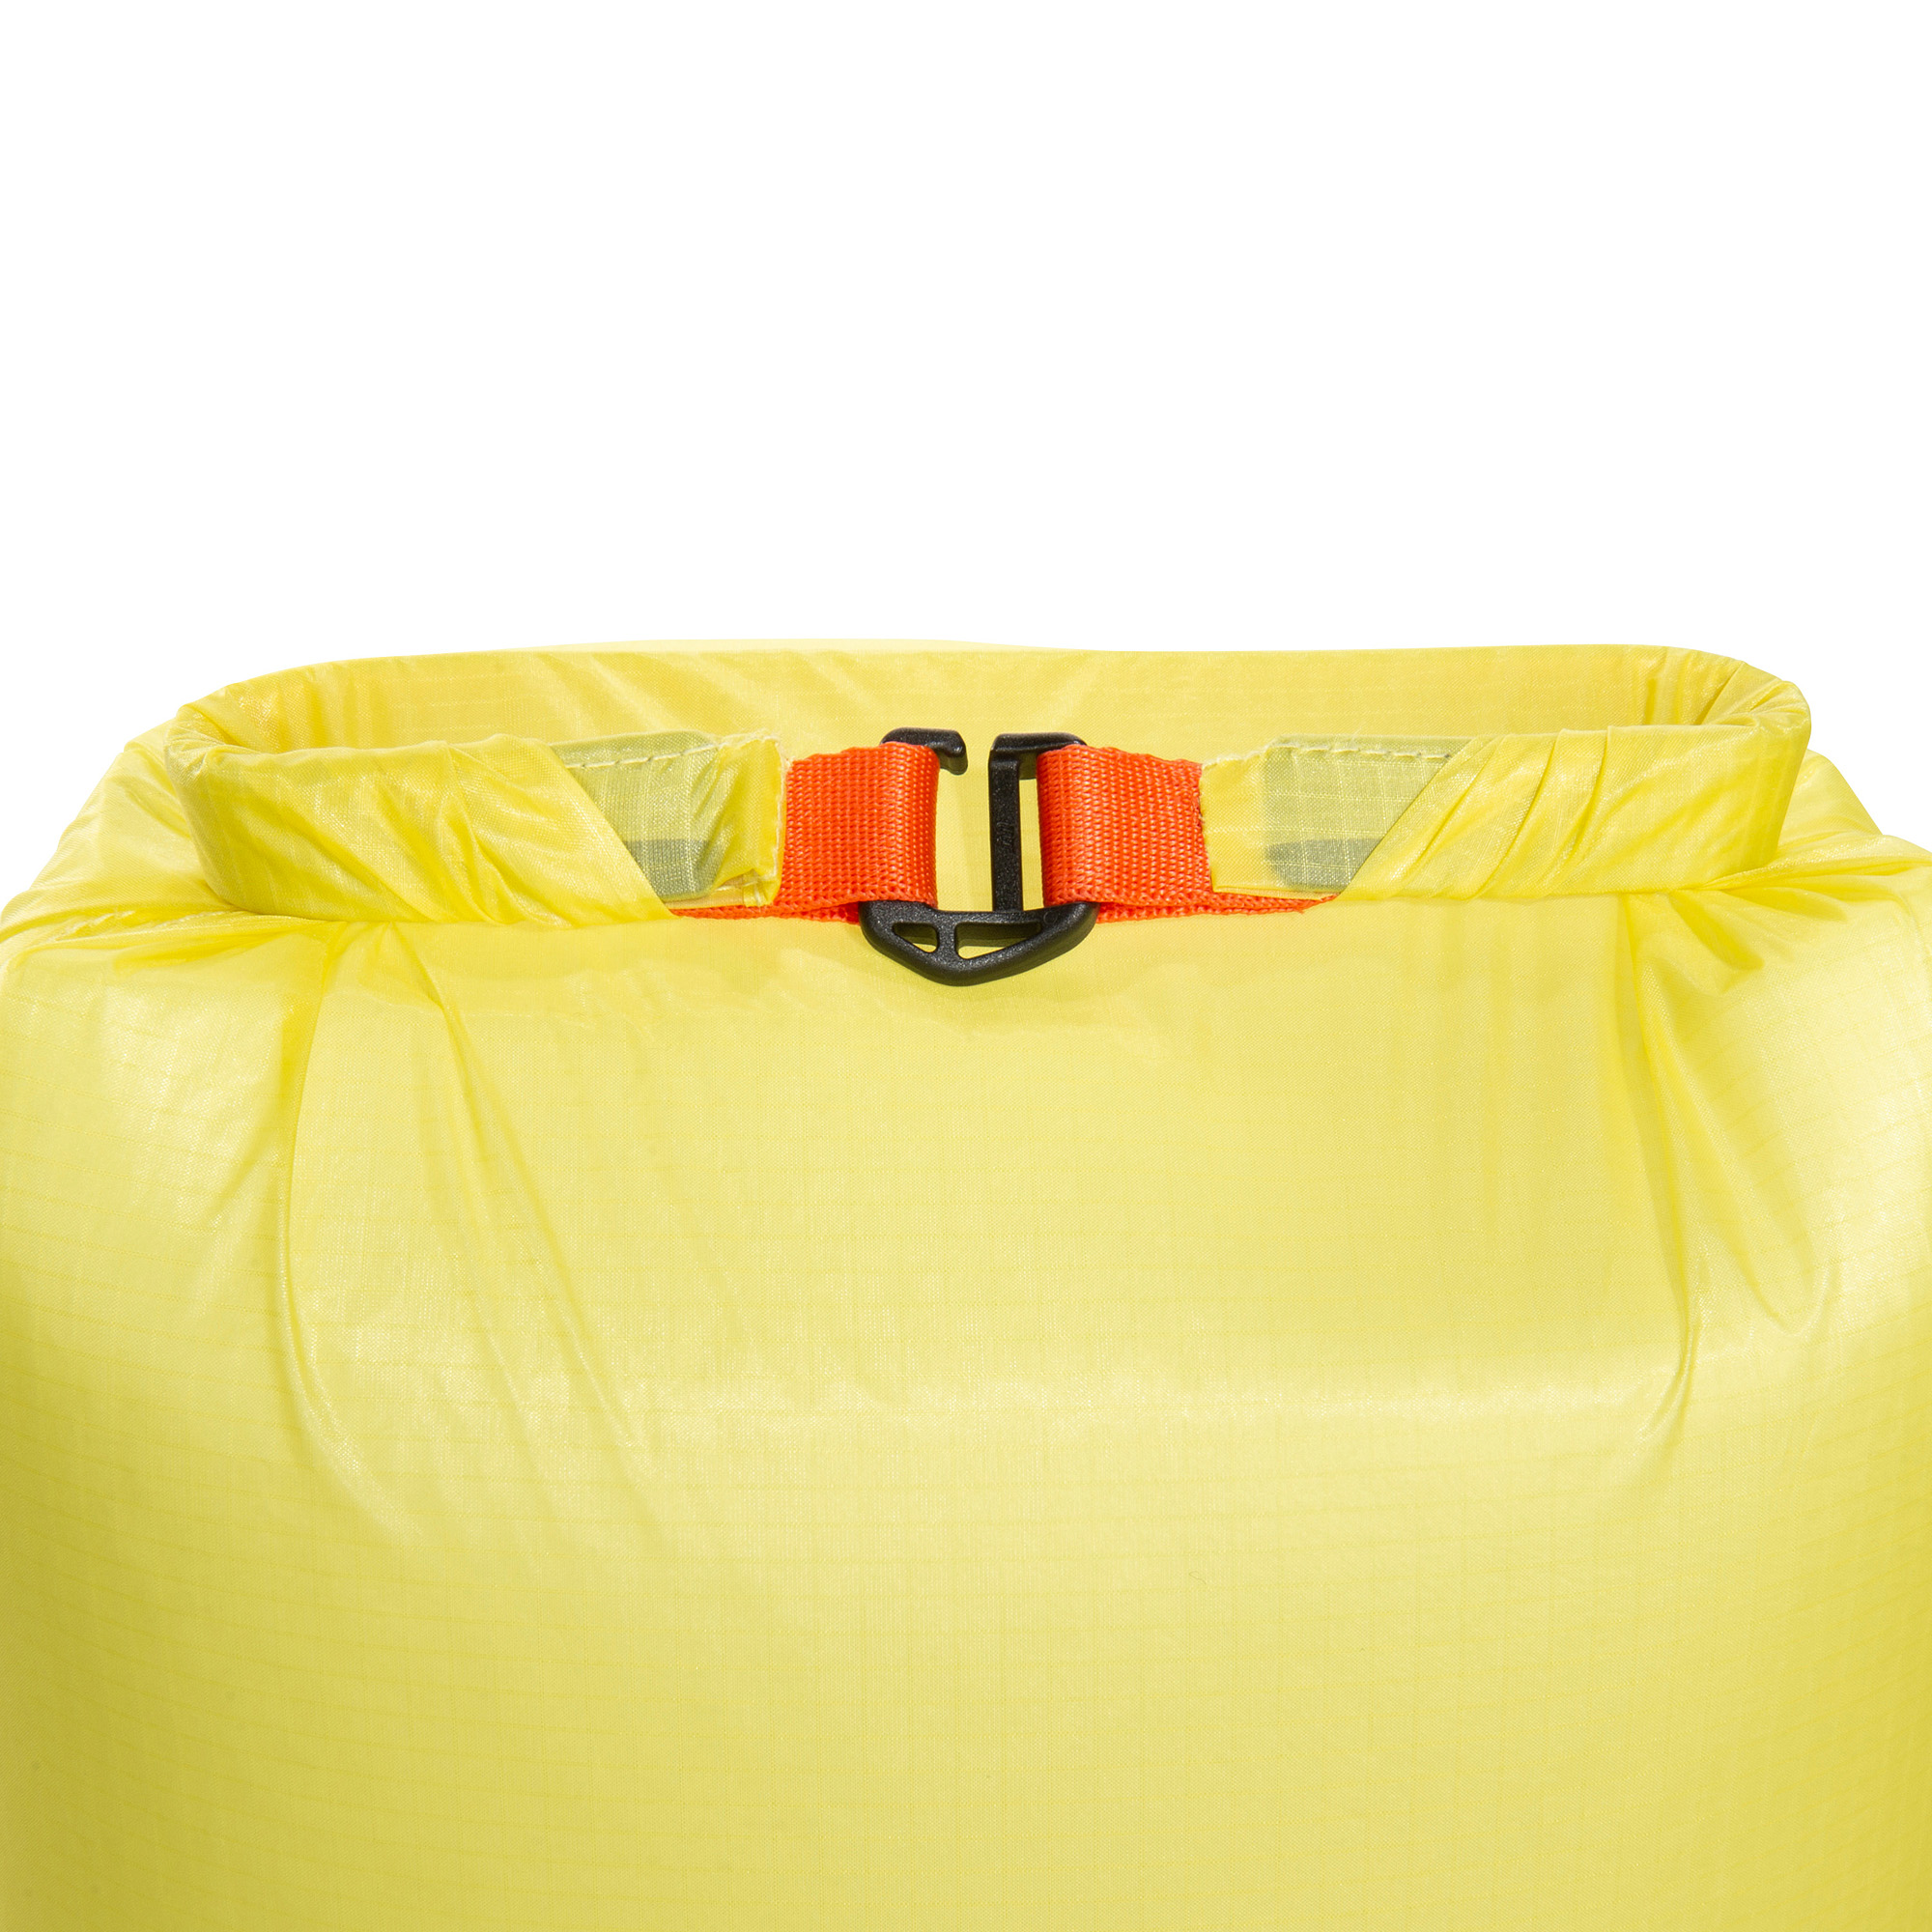 Tatonka SQZY Dry Bag 10l light yellow gelb Reisezubehör 4013236336542